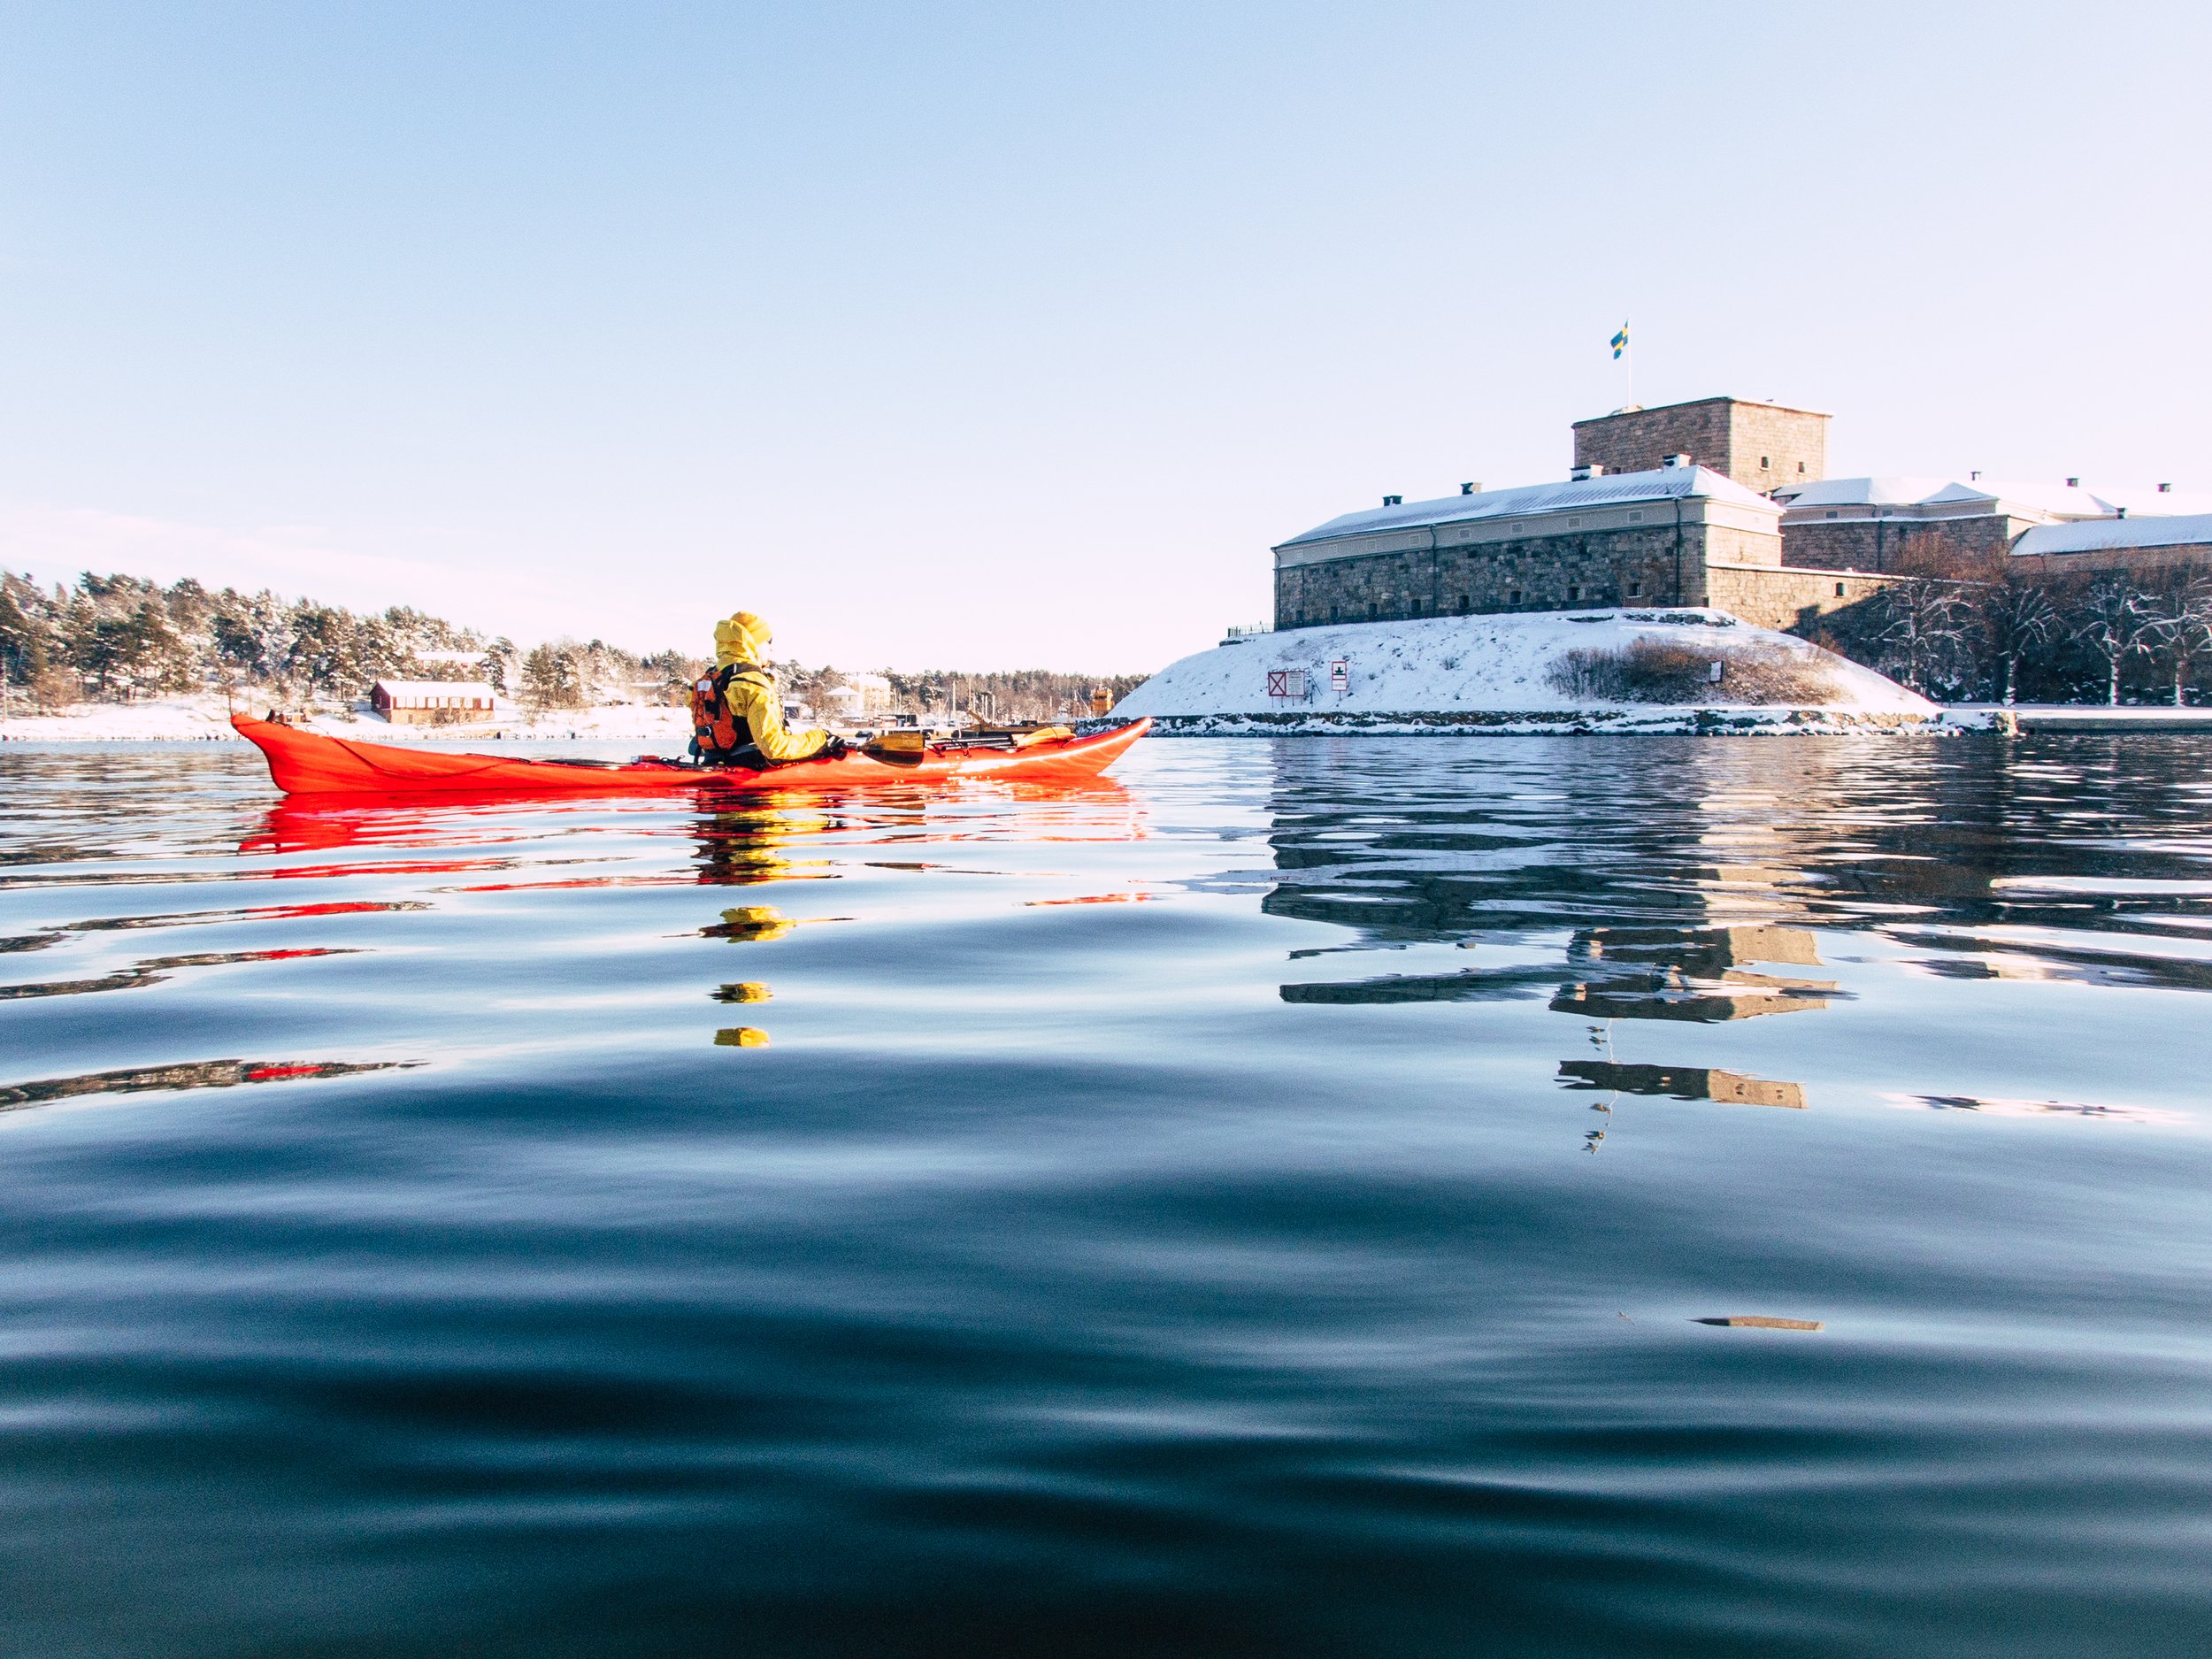 skargardens-kanotcenter-winter-kayak-kastellet-photo-milena.jpg